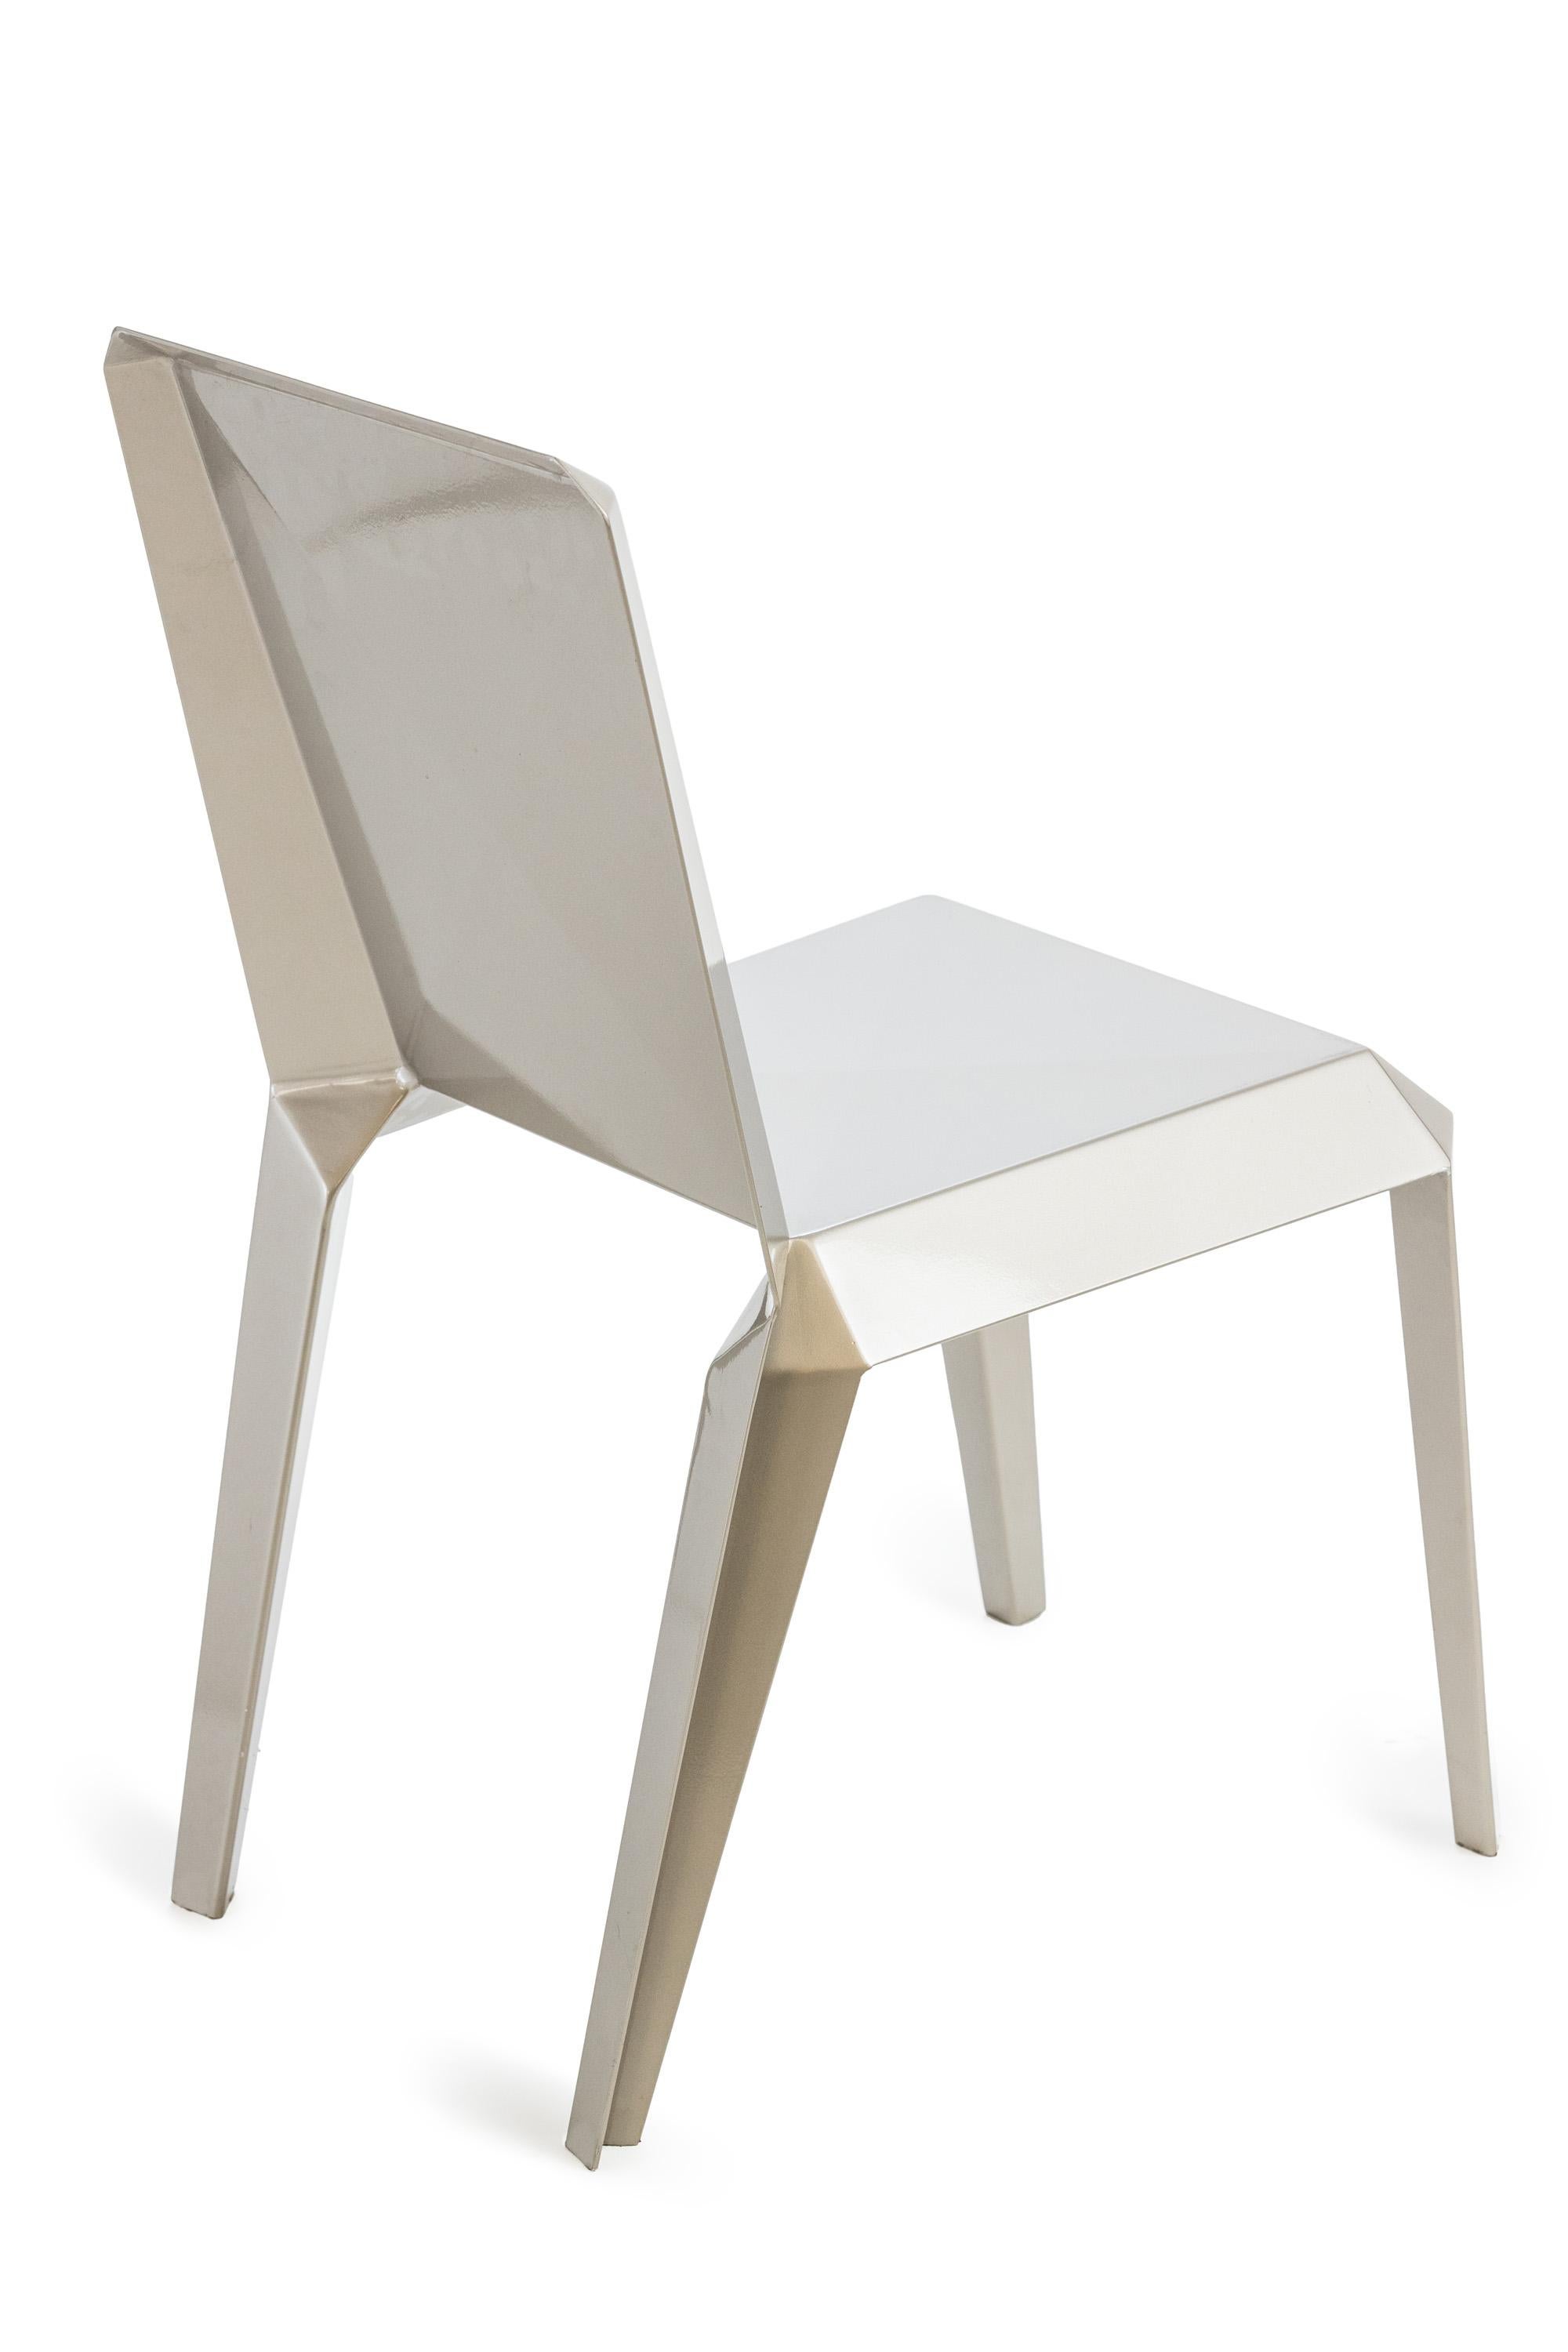 Italian Contemporary Lingotto Chair in Aluminium by Altreforme For Sale